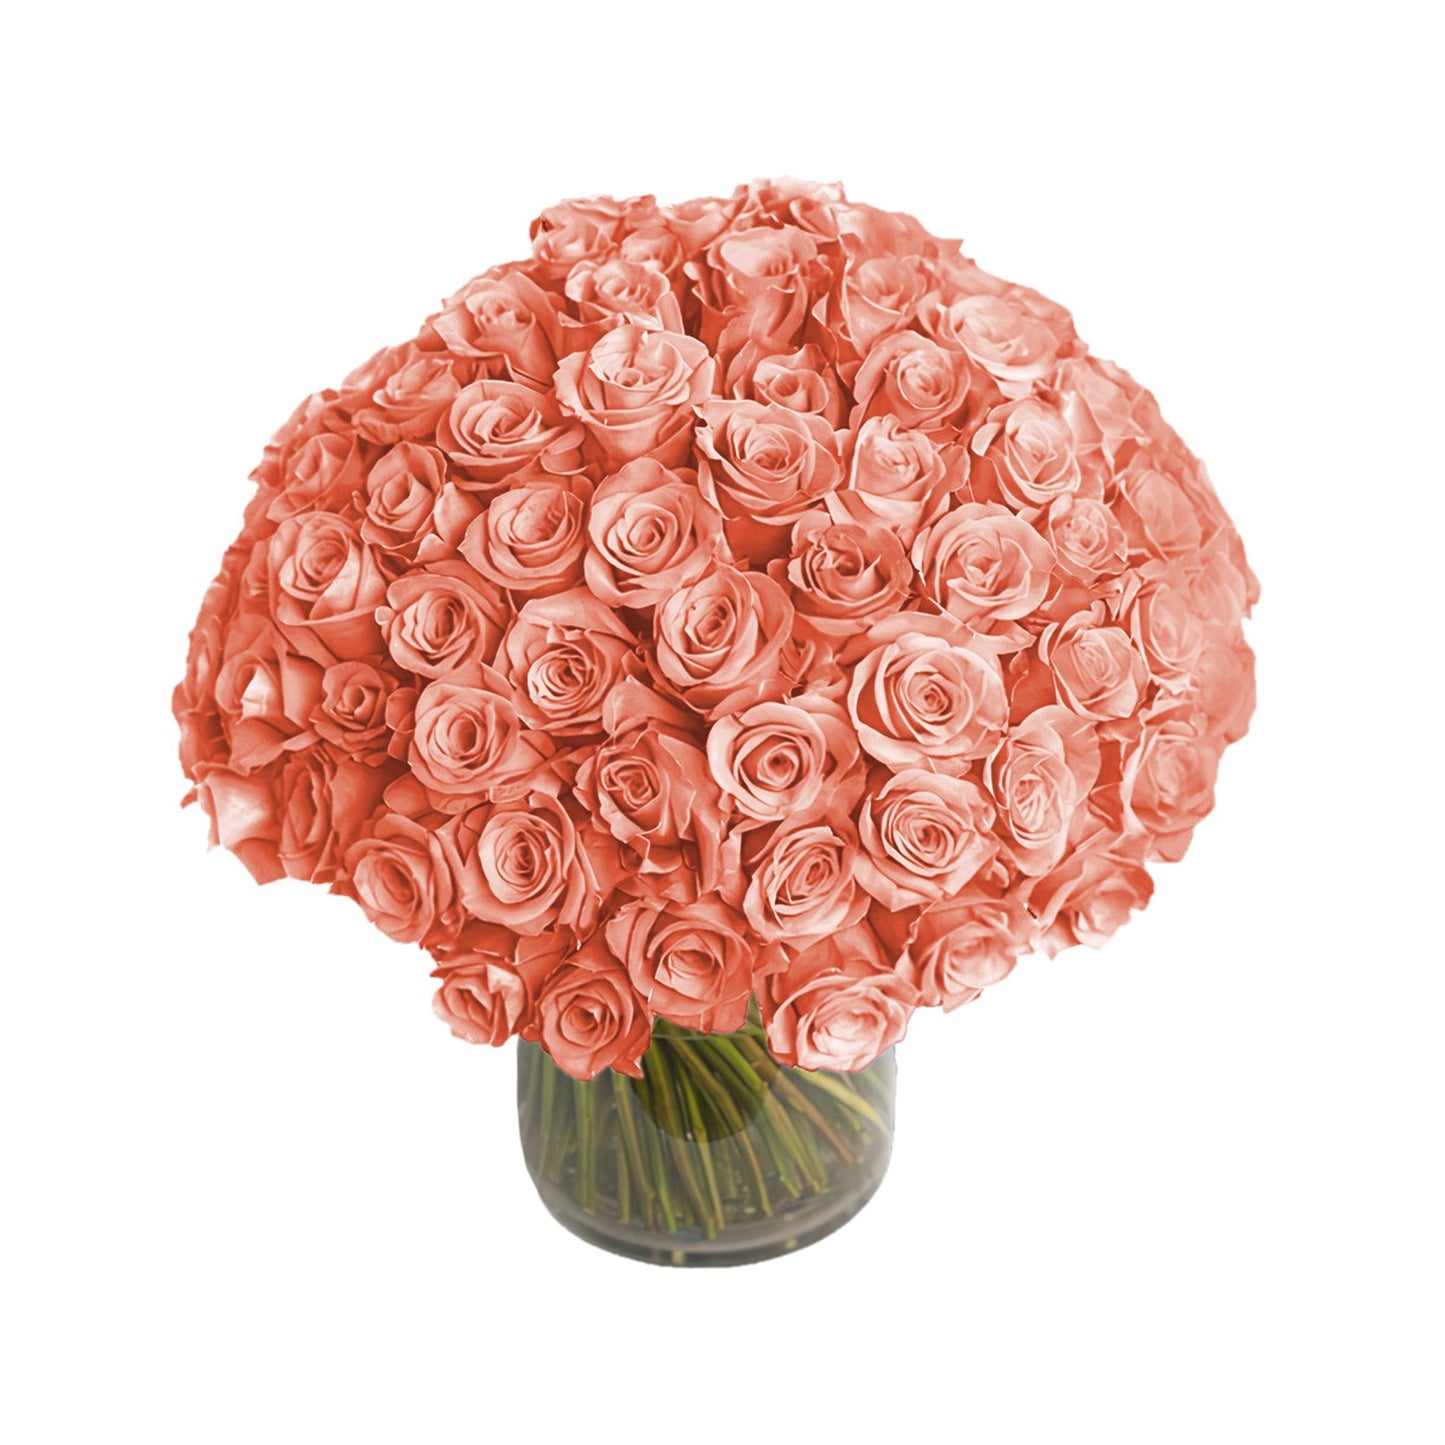 Fresh Roses in a Vase | 100 Peach Roses - Roses